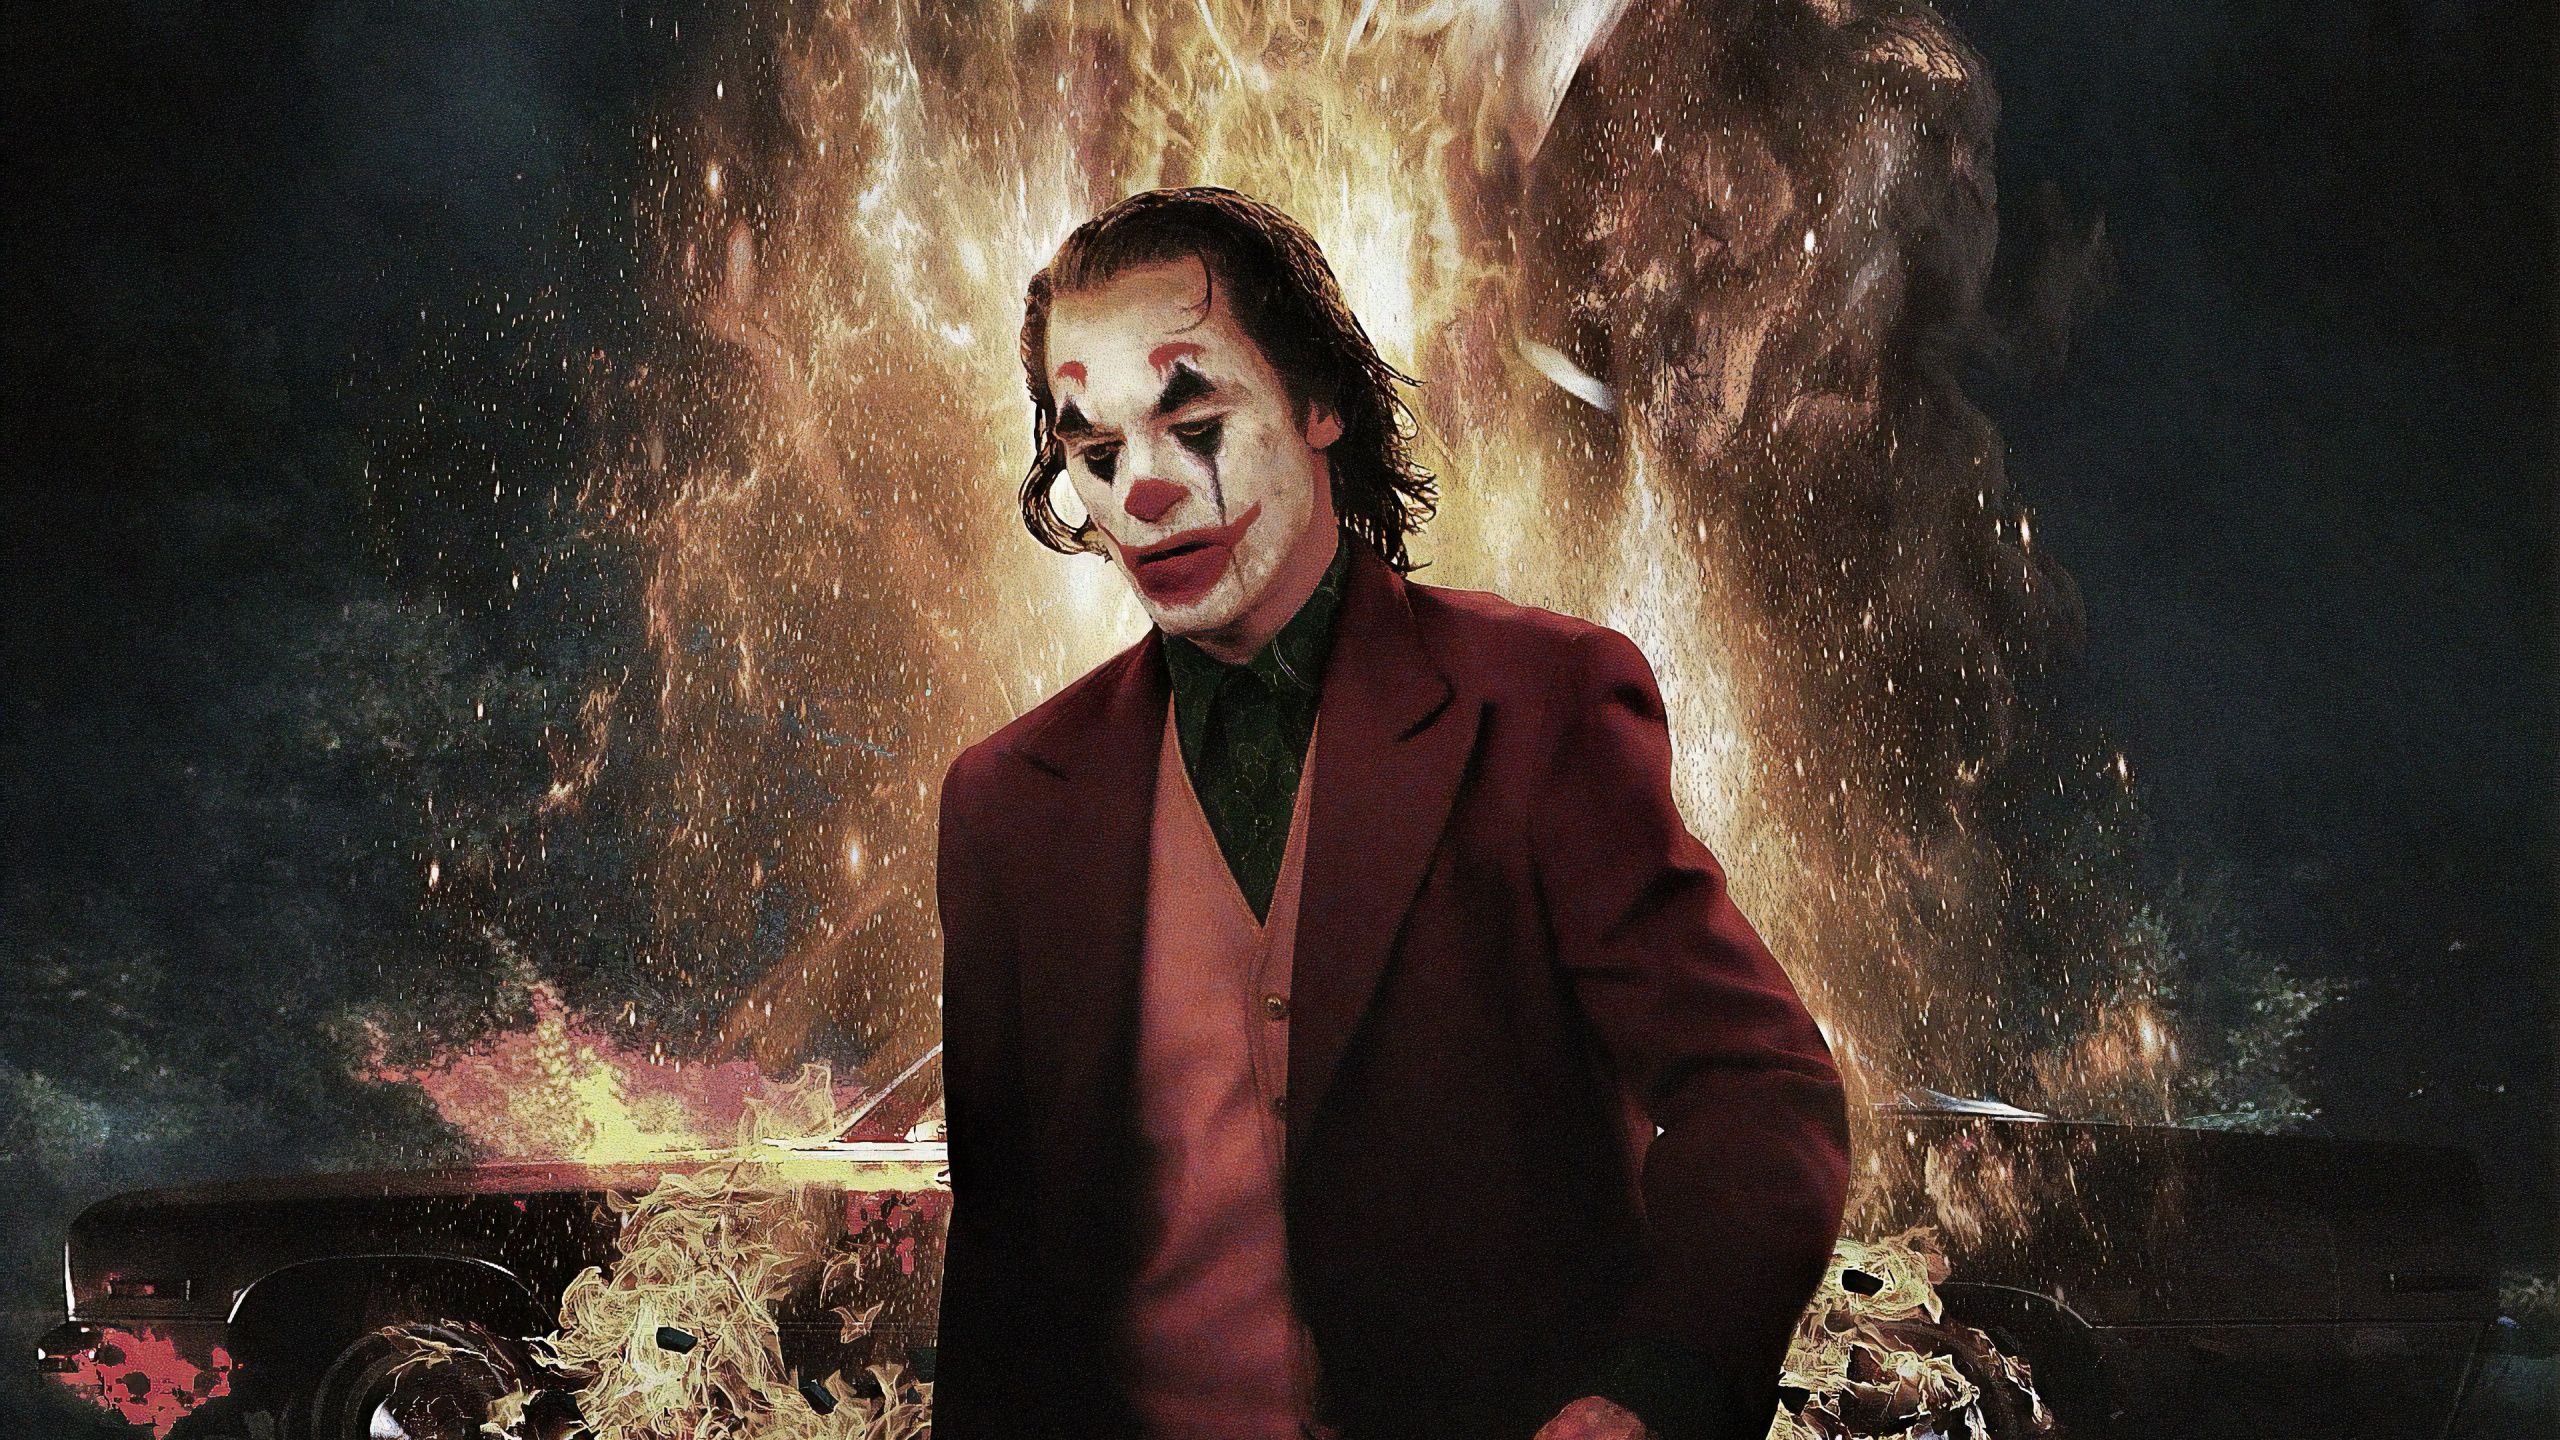 Download Art, Joker, 2019 movie wallpaper, 2560x Dual Wide